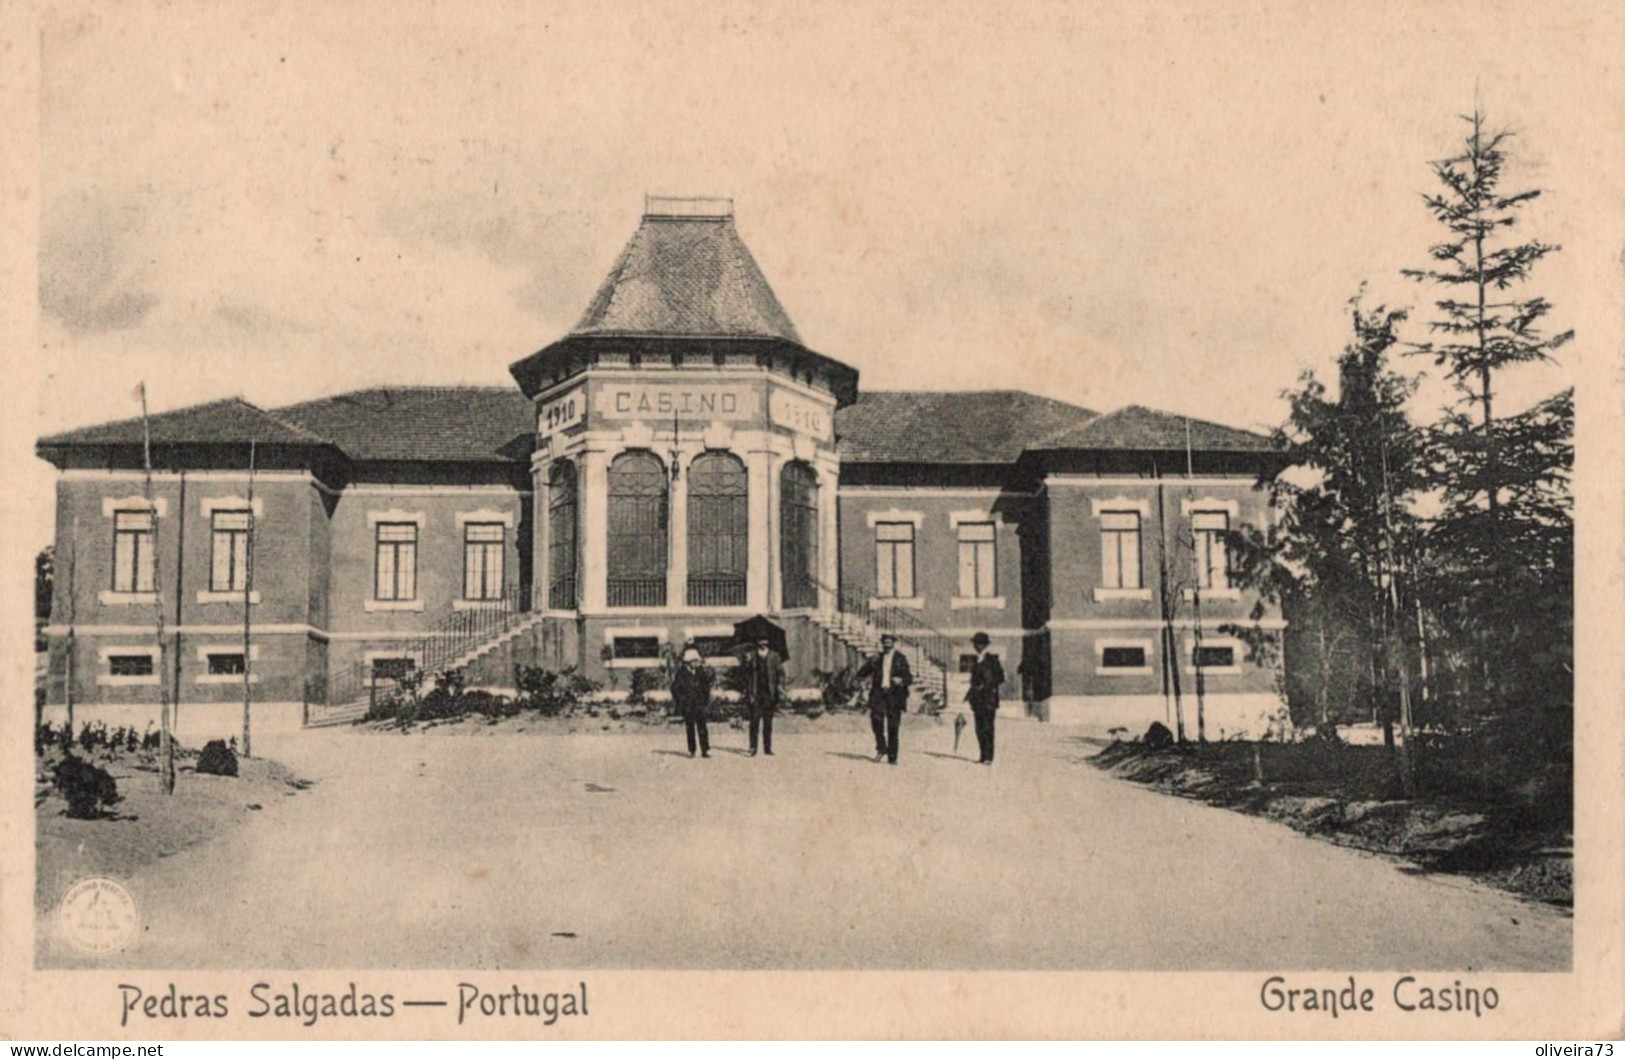 PEDRAS SALGADAS - Grande Casino - PORTUGAL - Vila Real